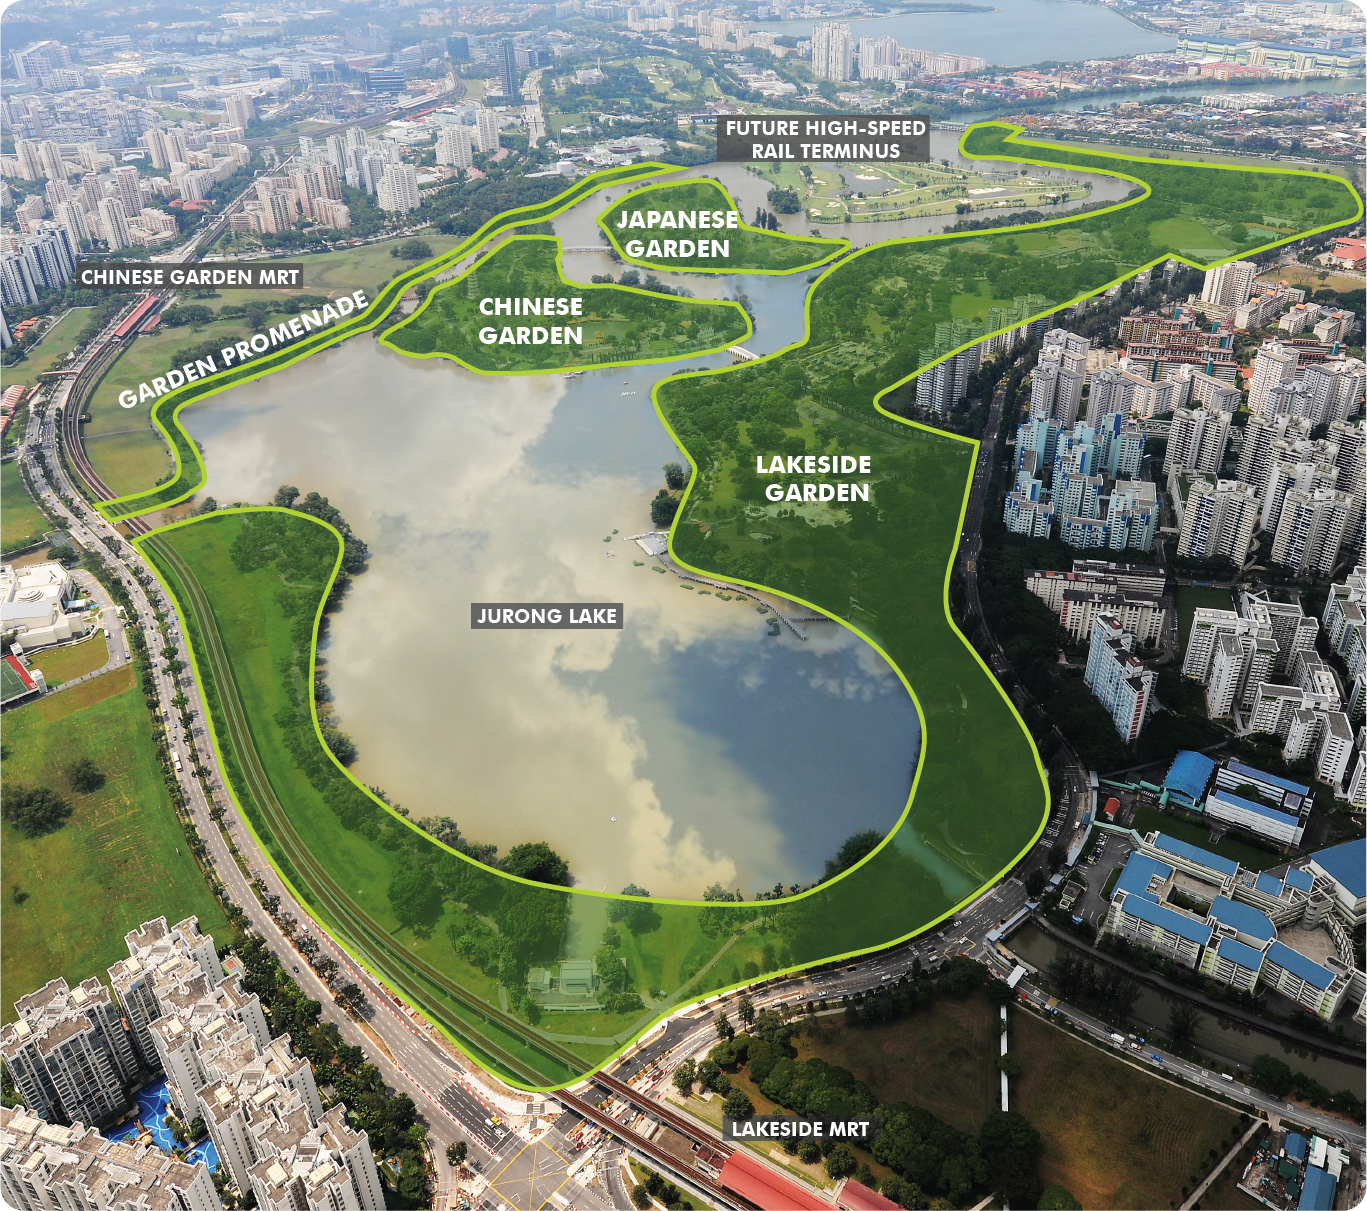 Map of Jurong Lakeside Garden, Singapore